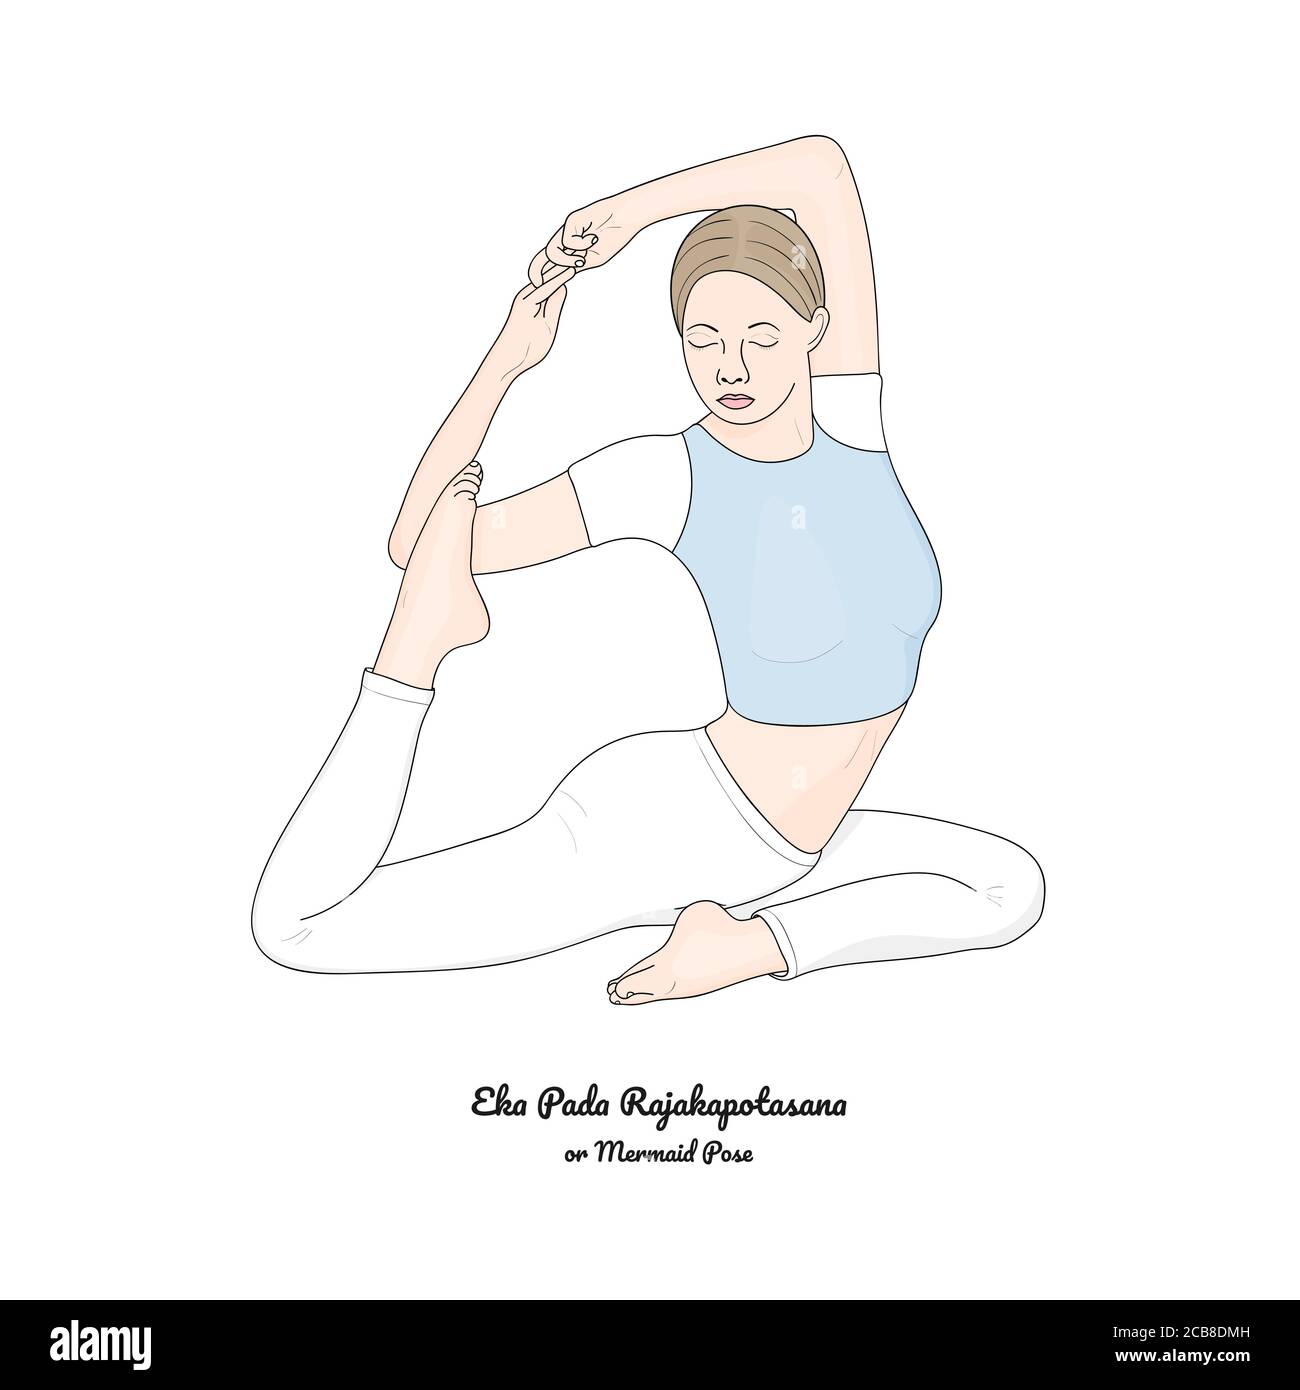 WorkoutLabs Yoga Cards – Beginner: Visual Study, Class India | Ubuy